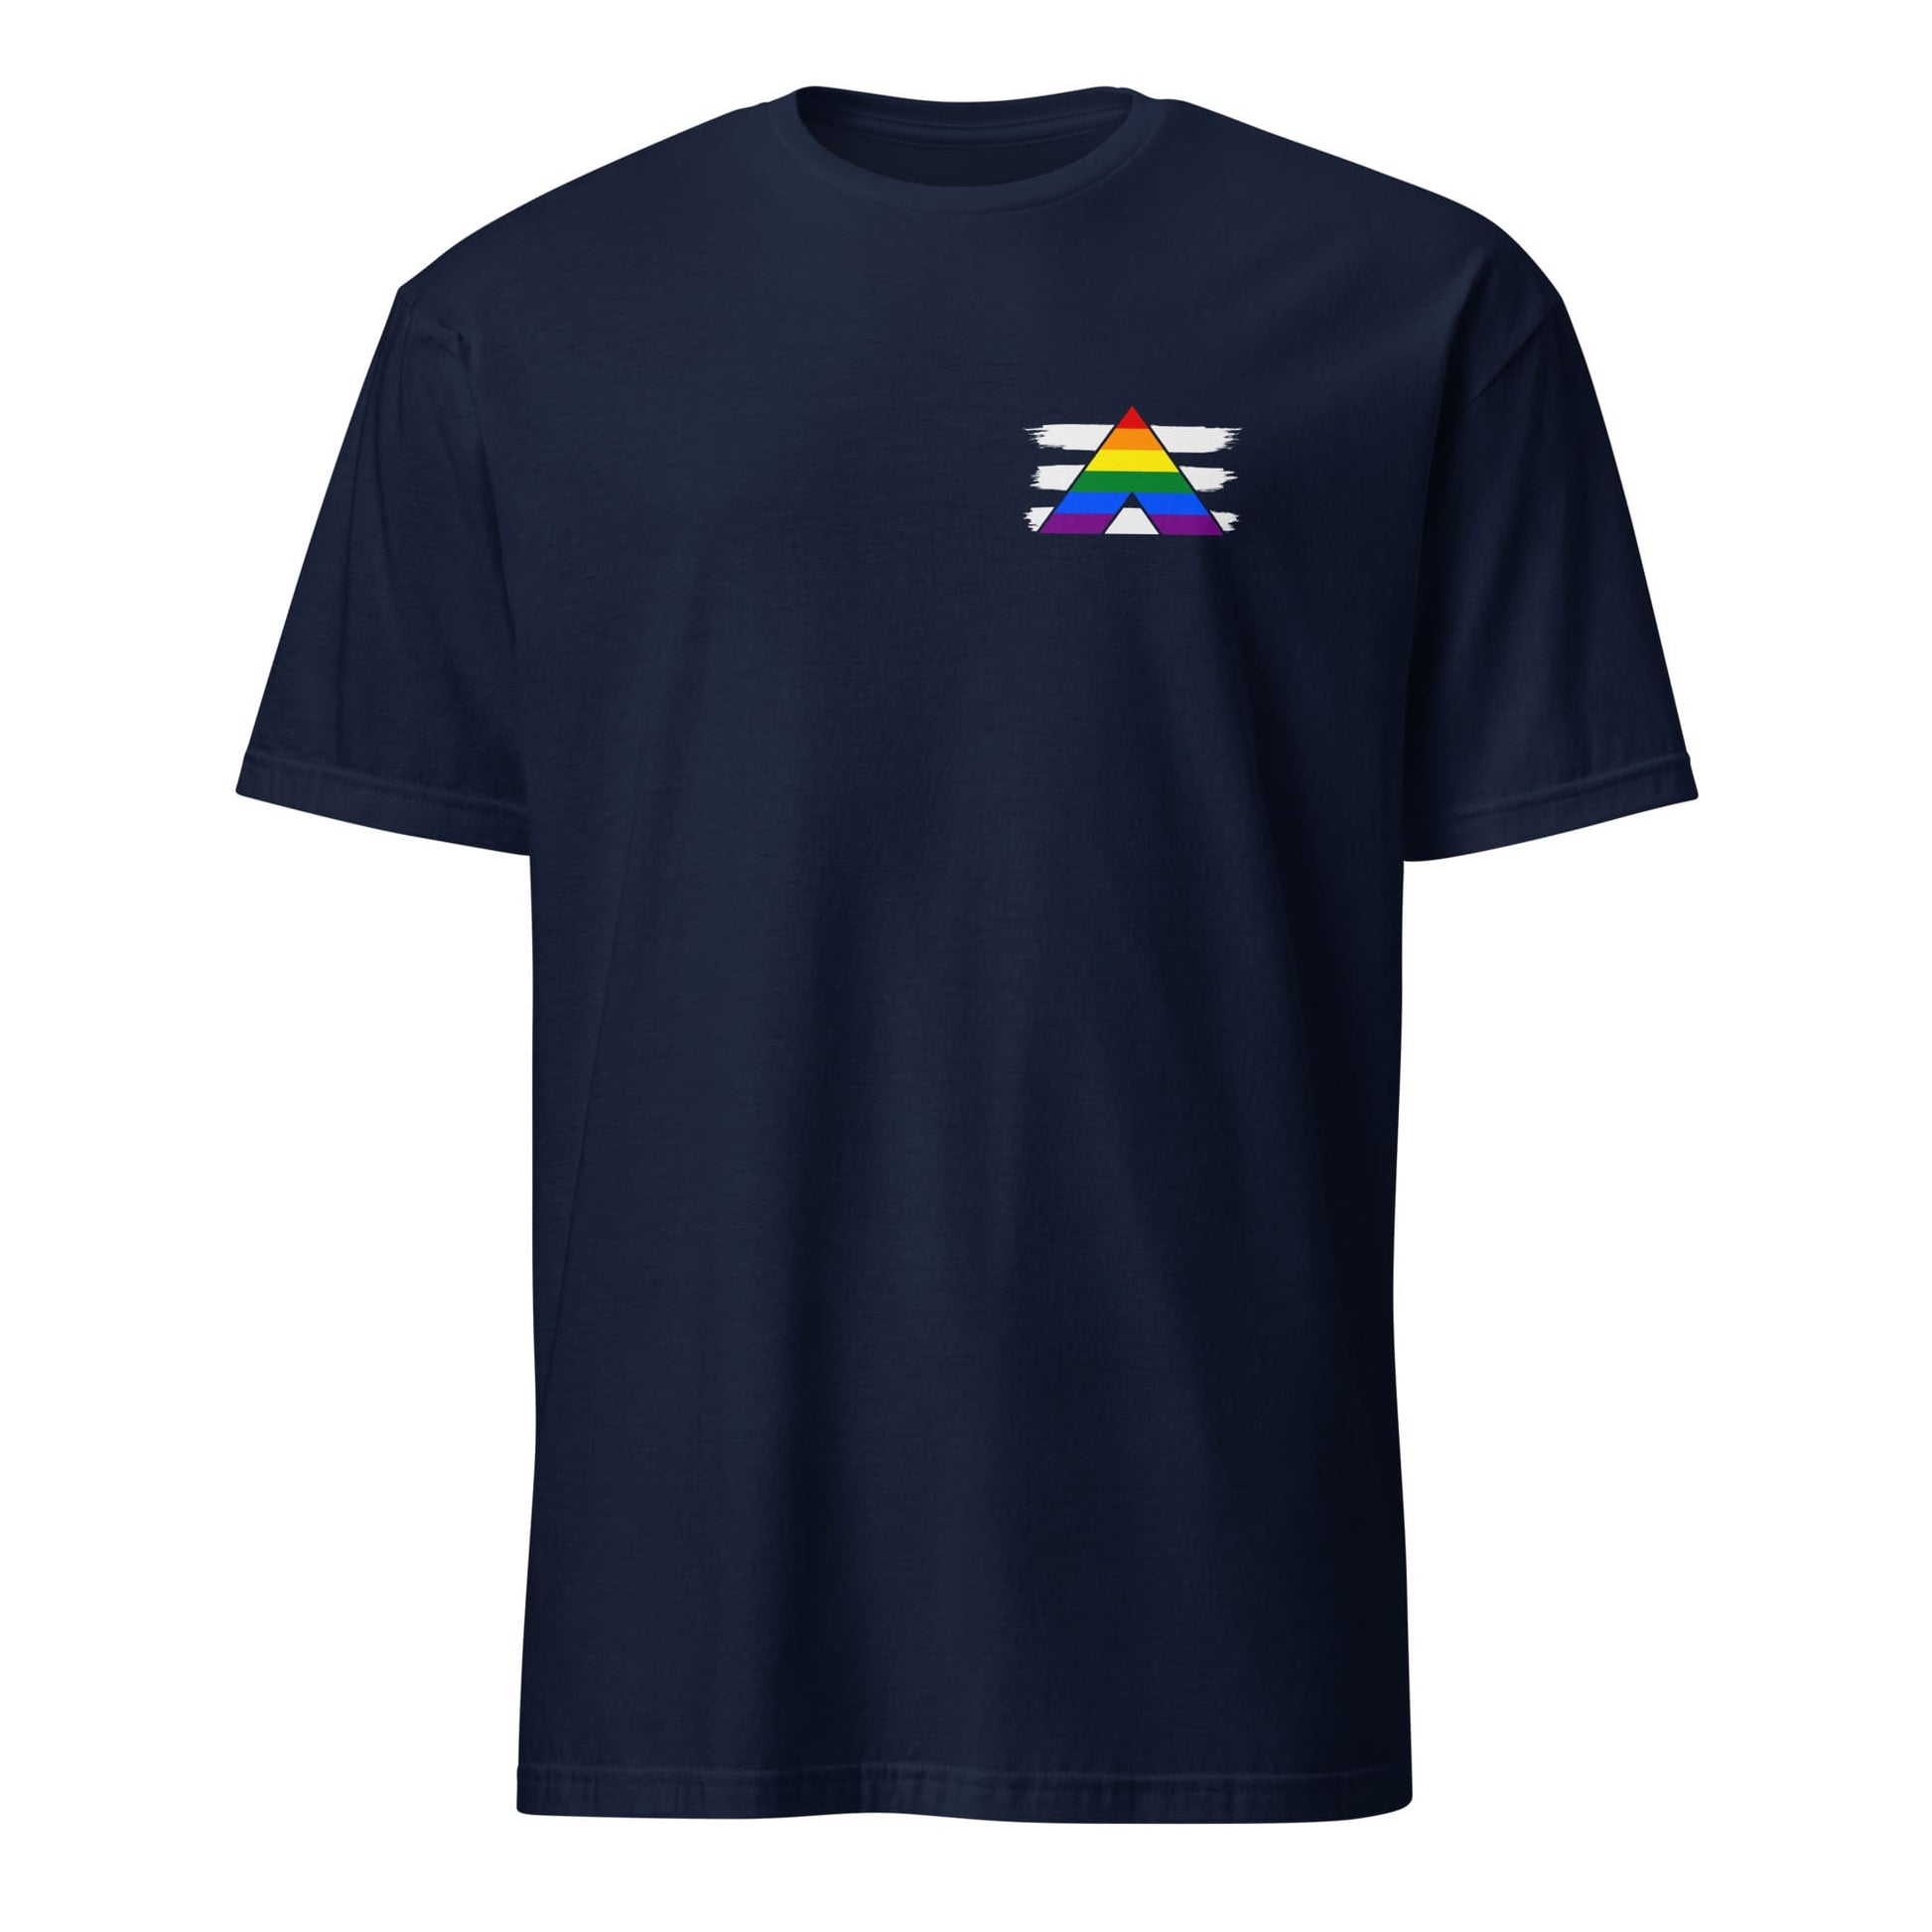 LGBTQ ally pride shirt, pocket design tee, navy